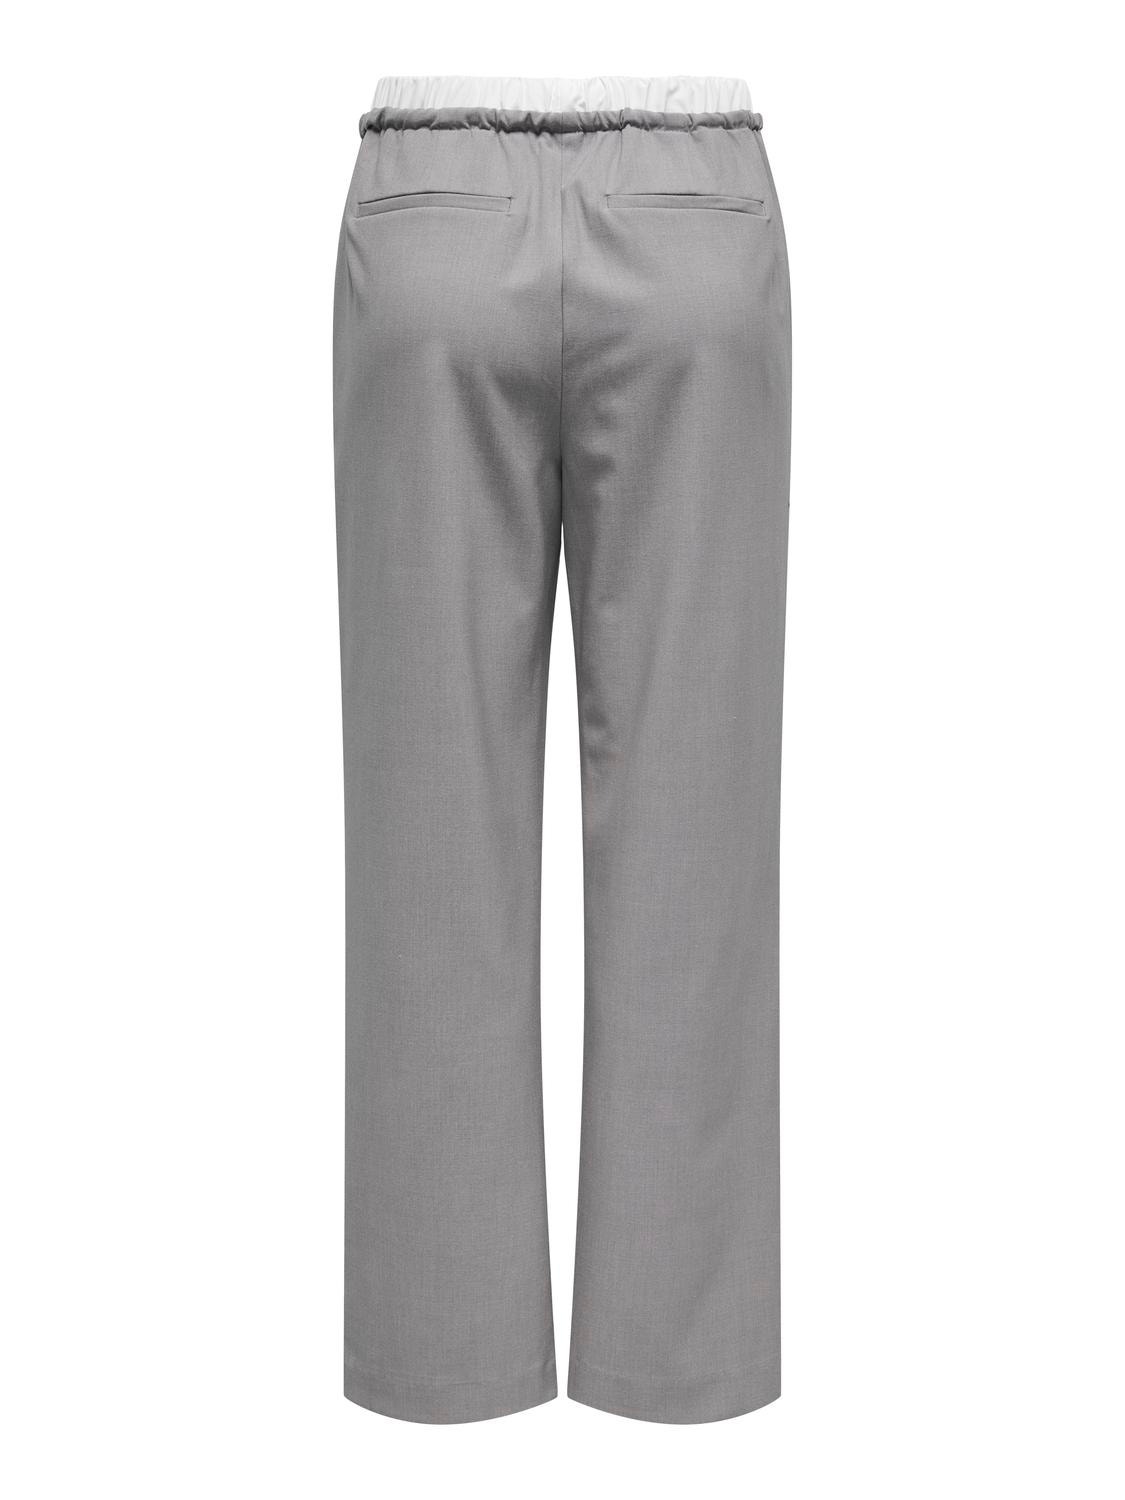 ONLY Gerade geschnitten Hohe Taille Hose -Light Grey Melange - 15338509